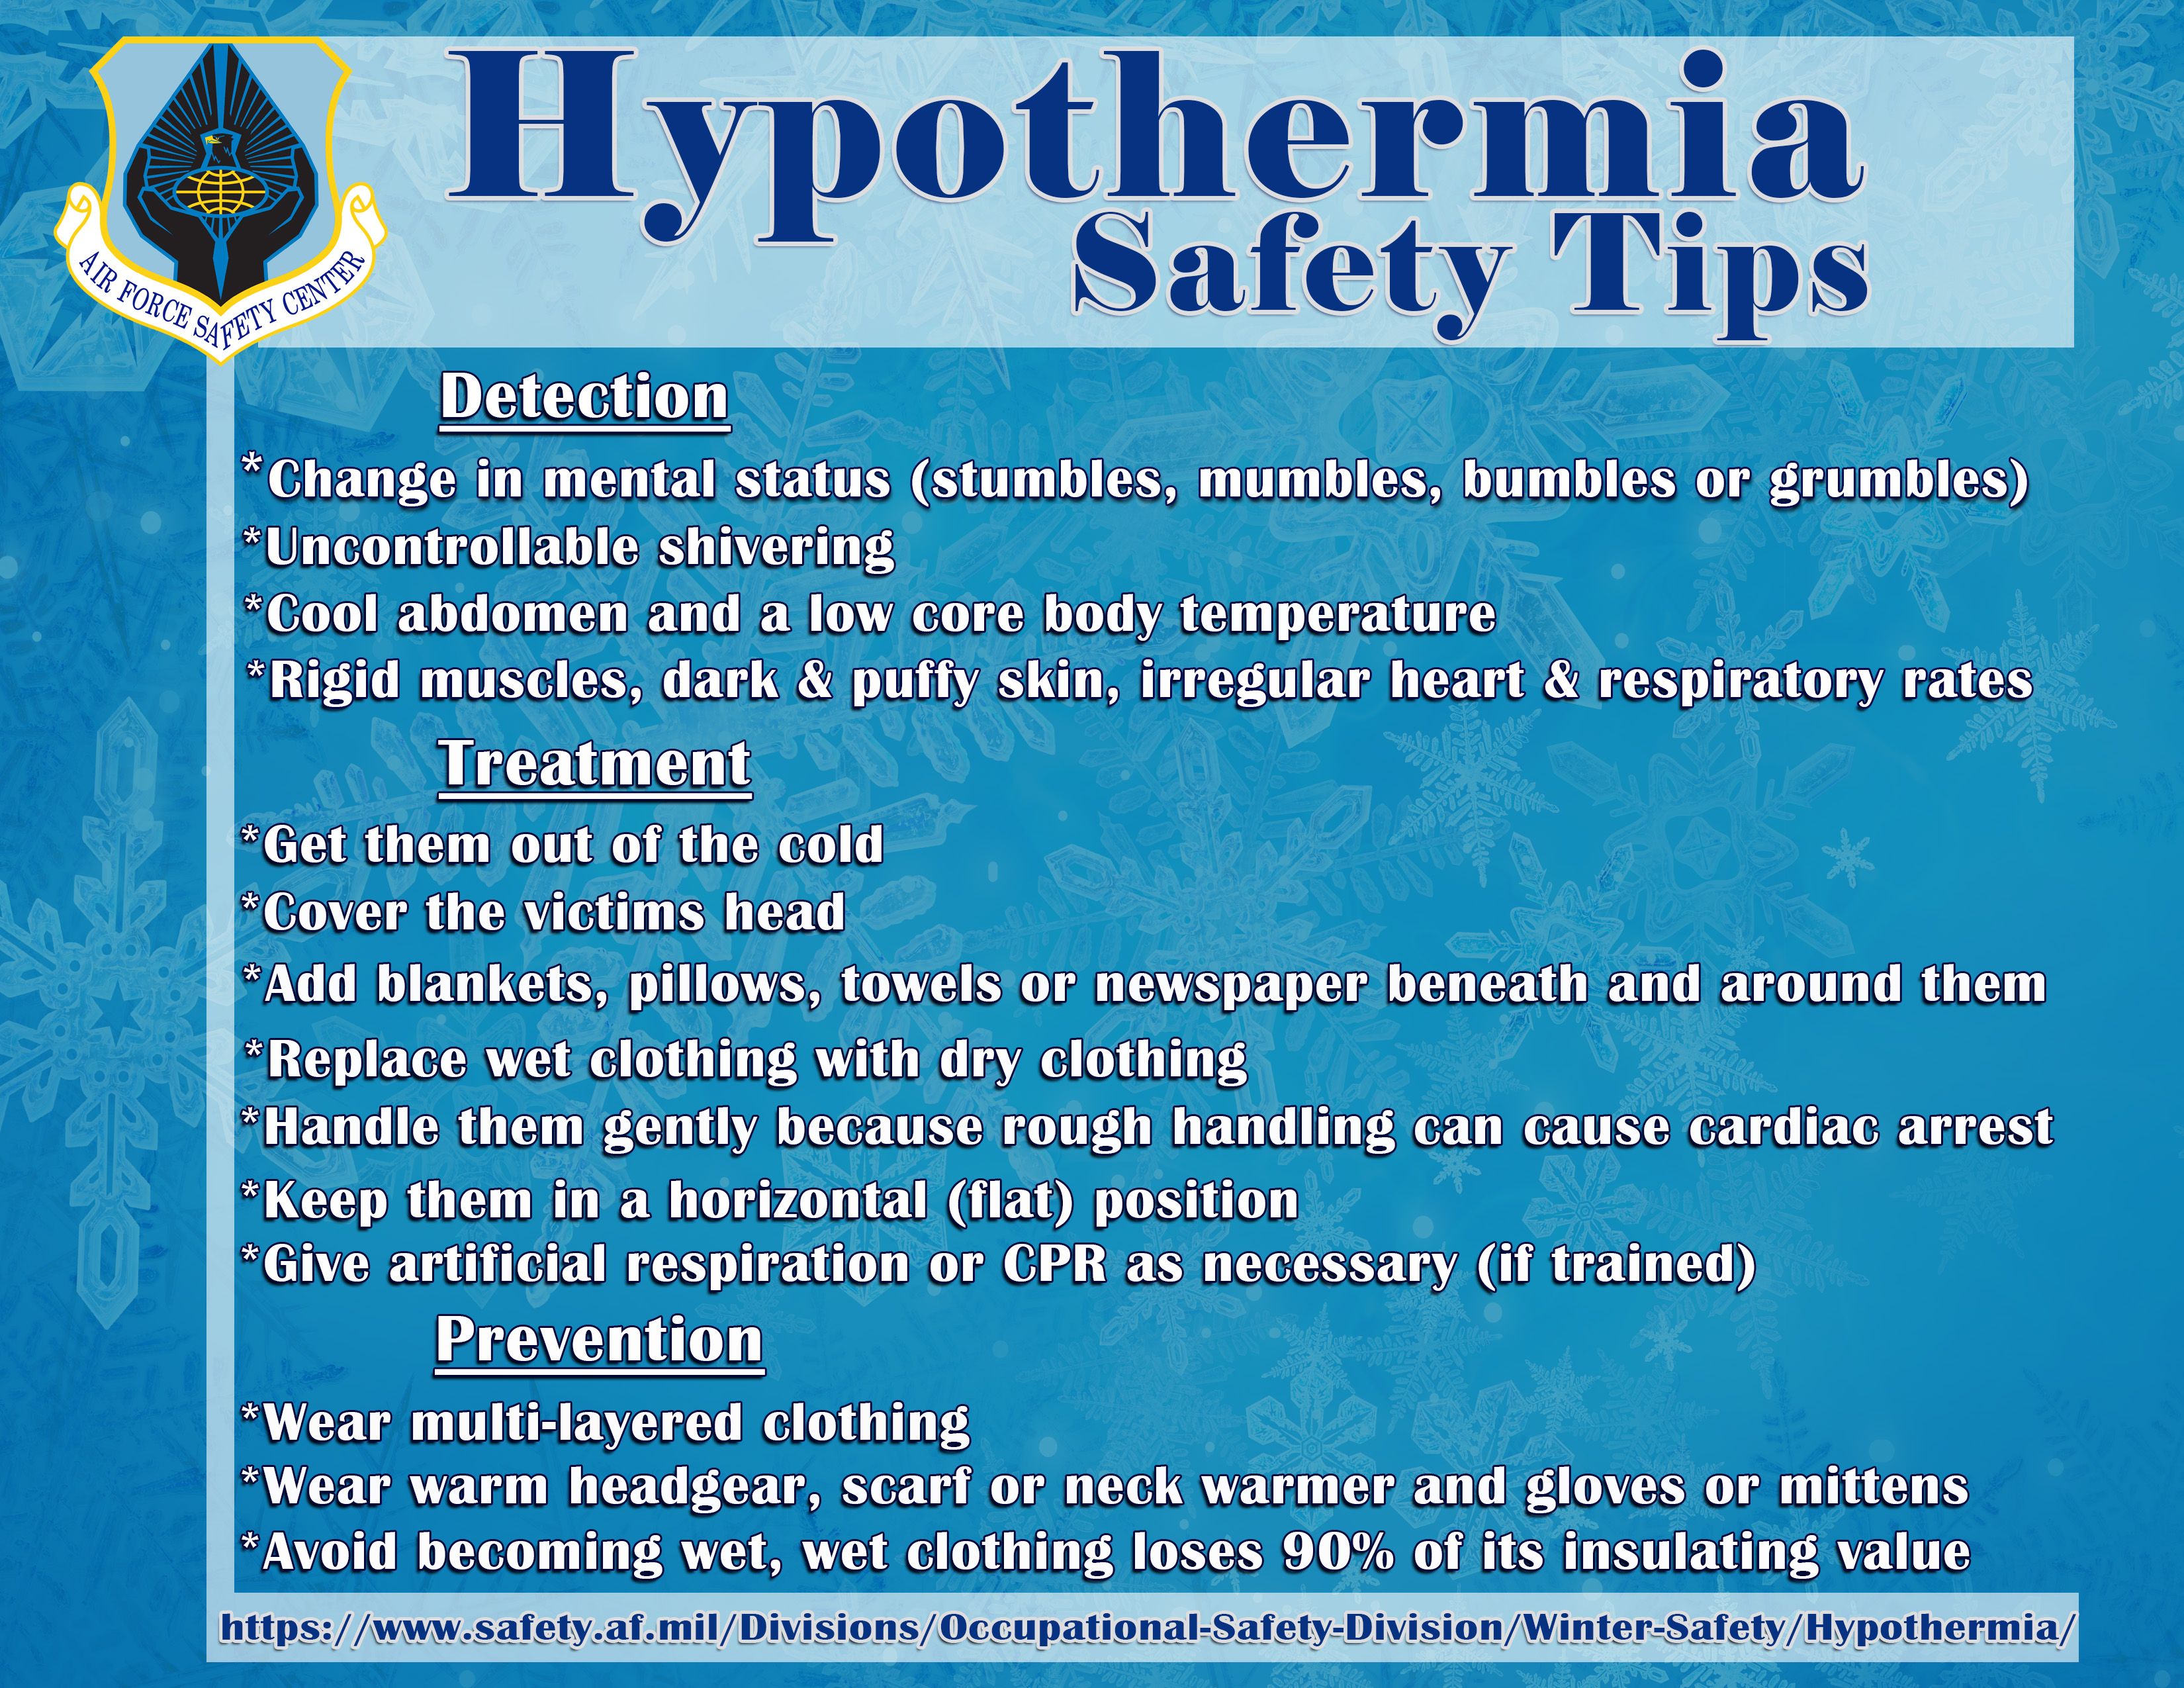 Hypothermia Safety Tips